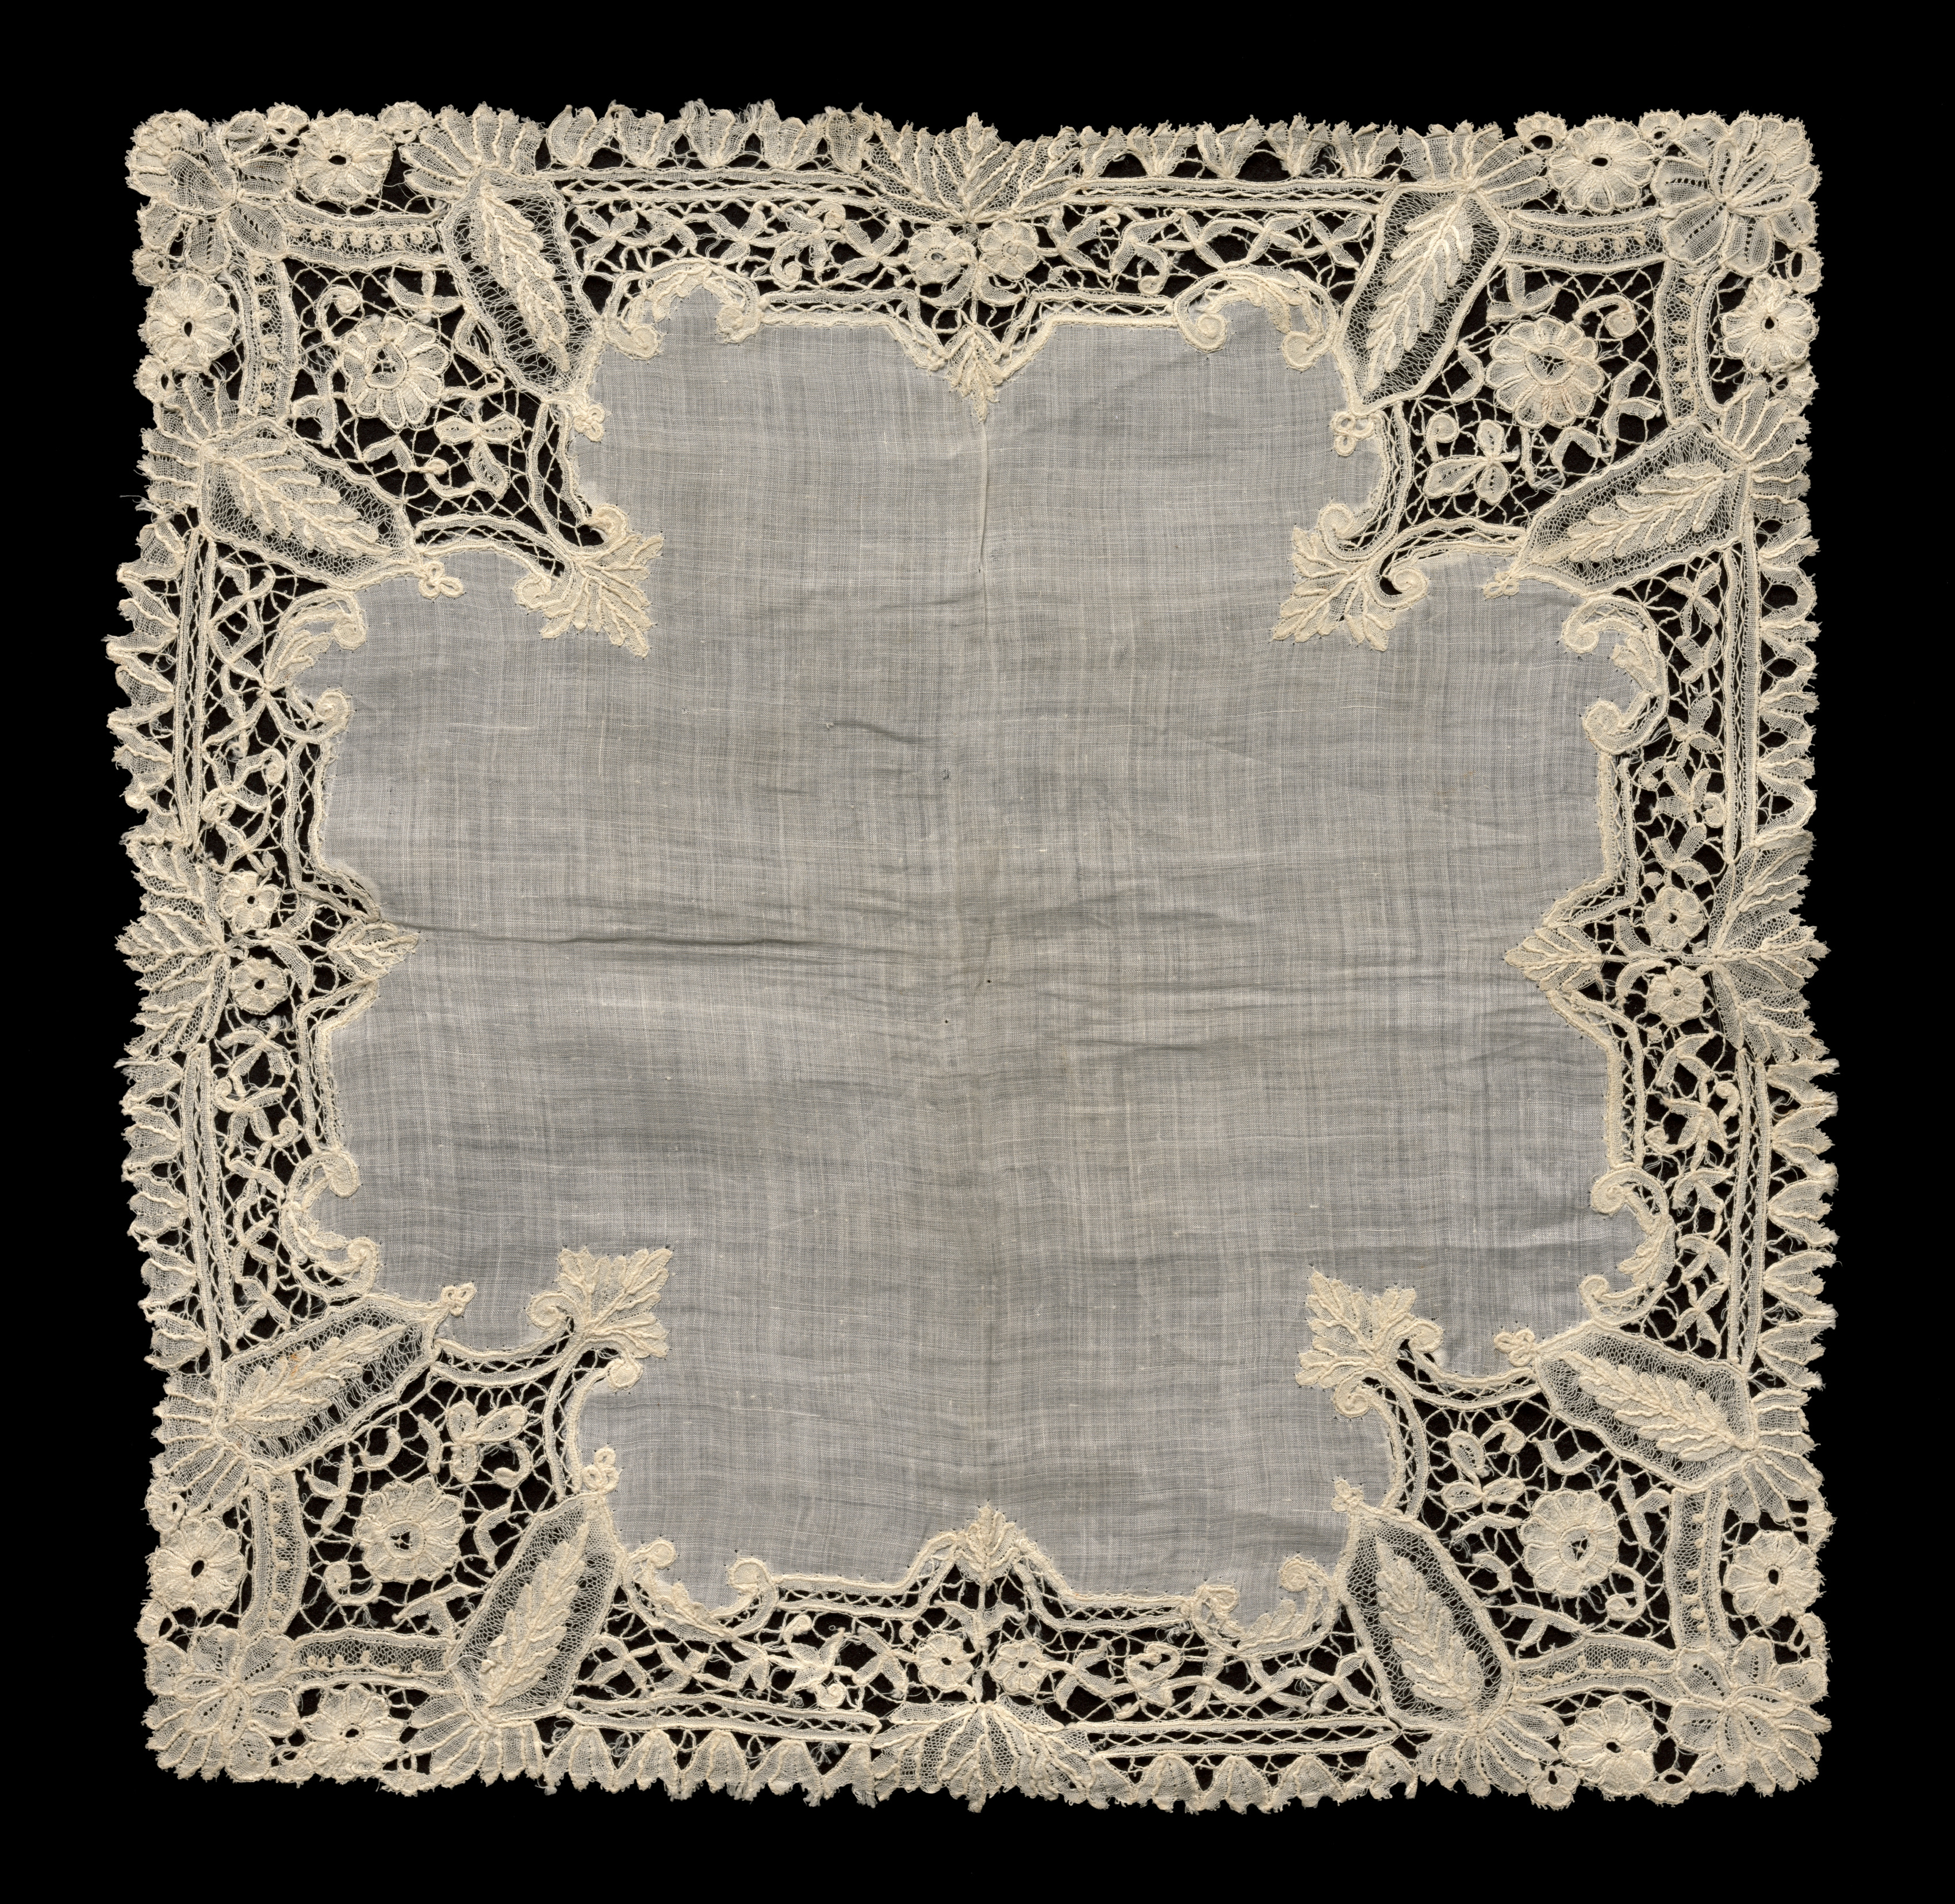 Bobbin Lace (Duchesse) Handkerchief